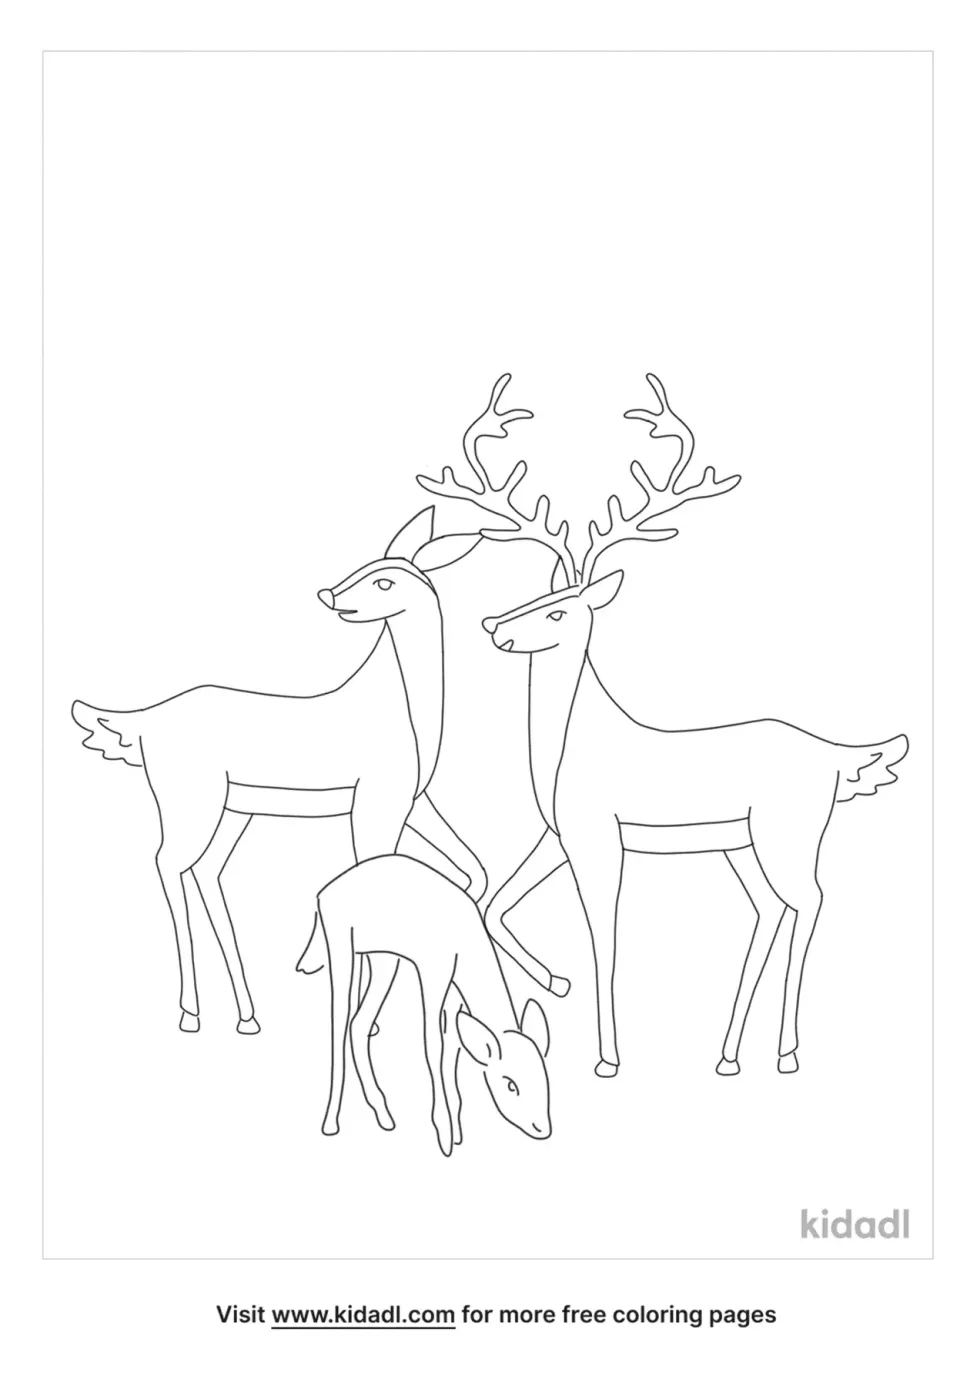 Reindeer Family